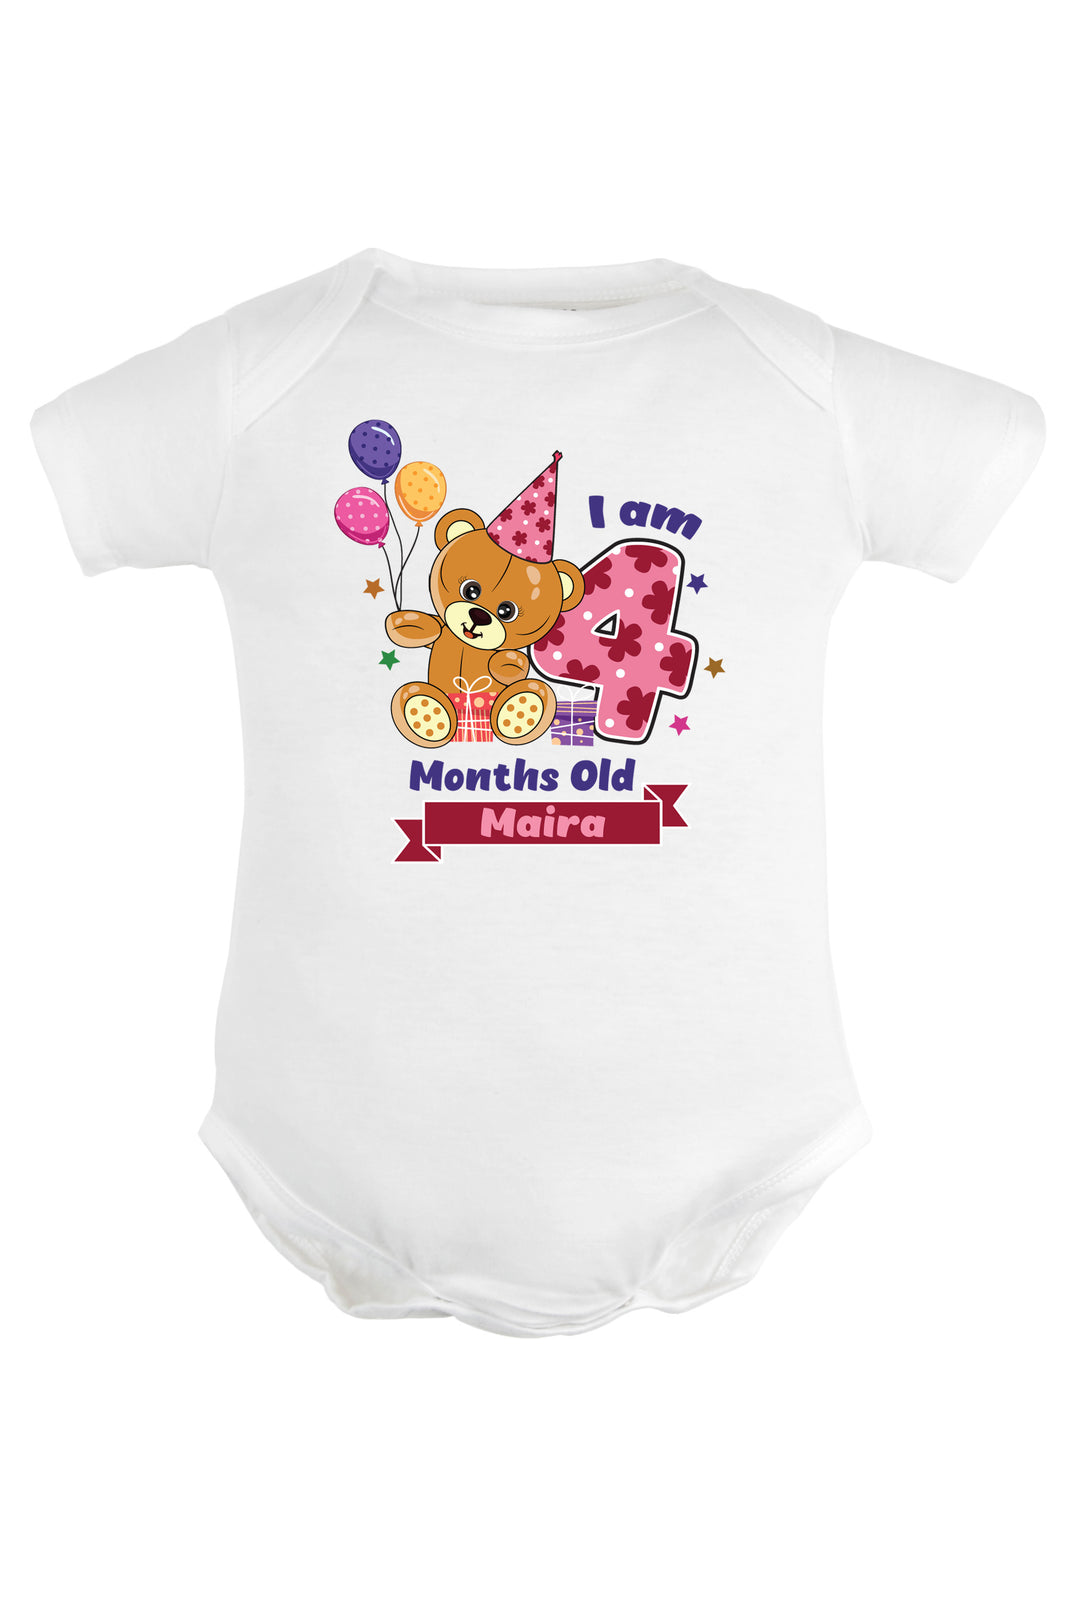 Four Month Milestone Baby Romper | Onesies - Birthday Teddy w/ Custom Name